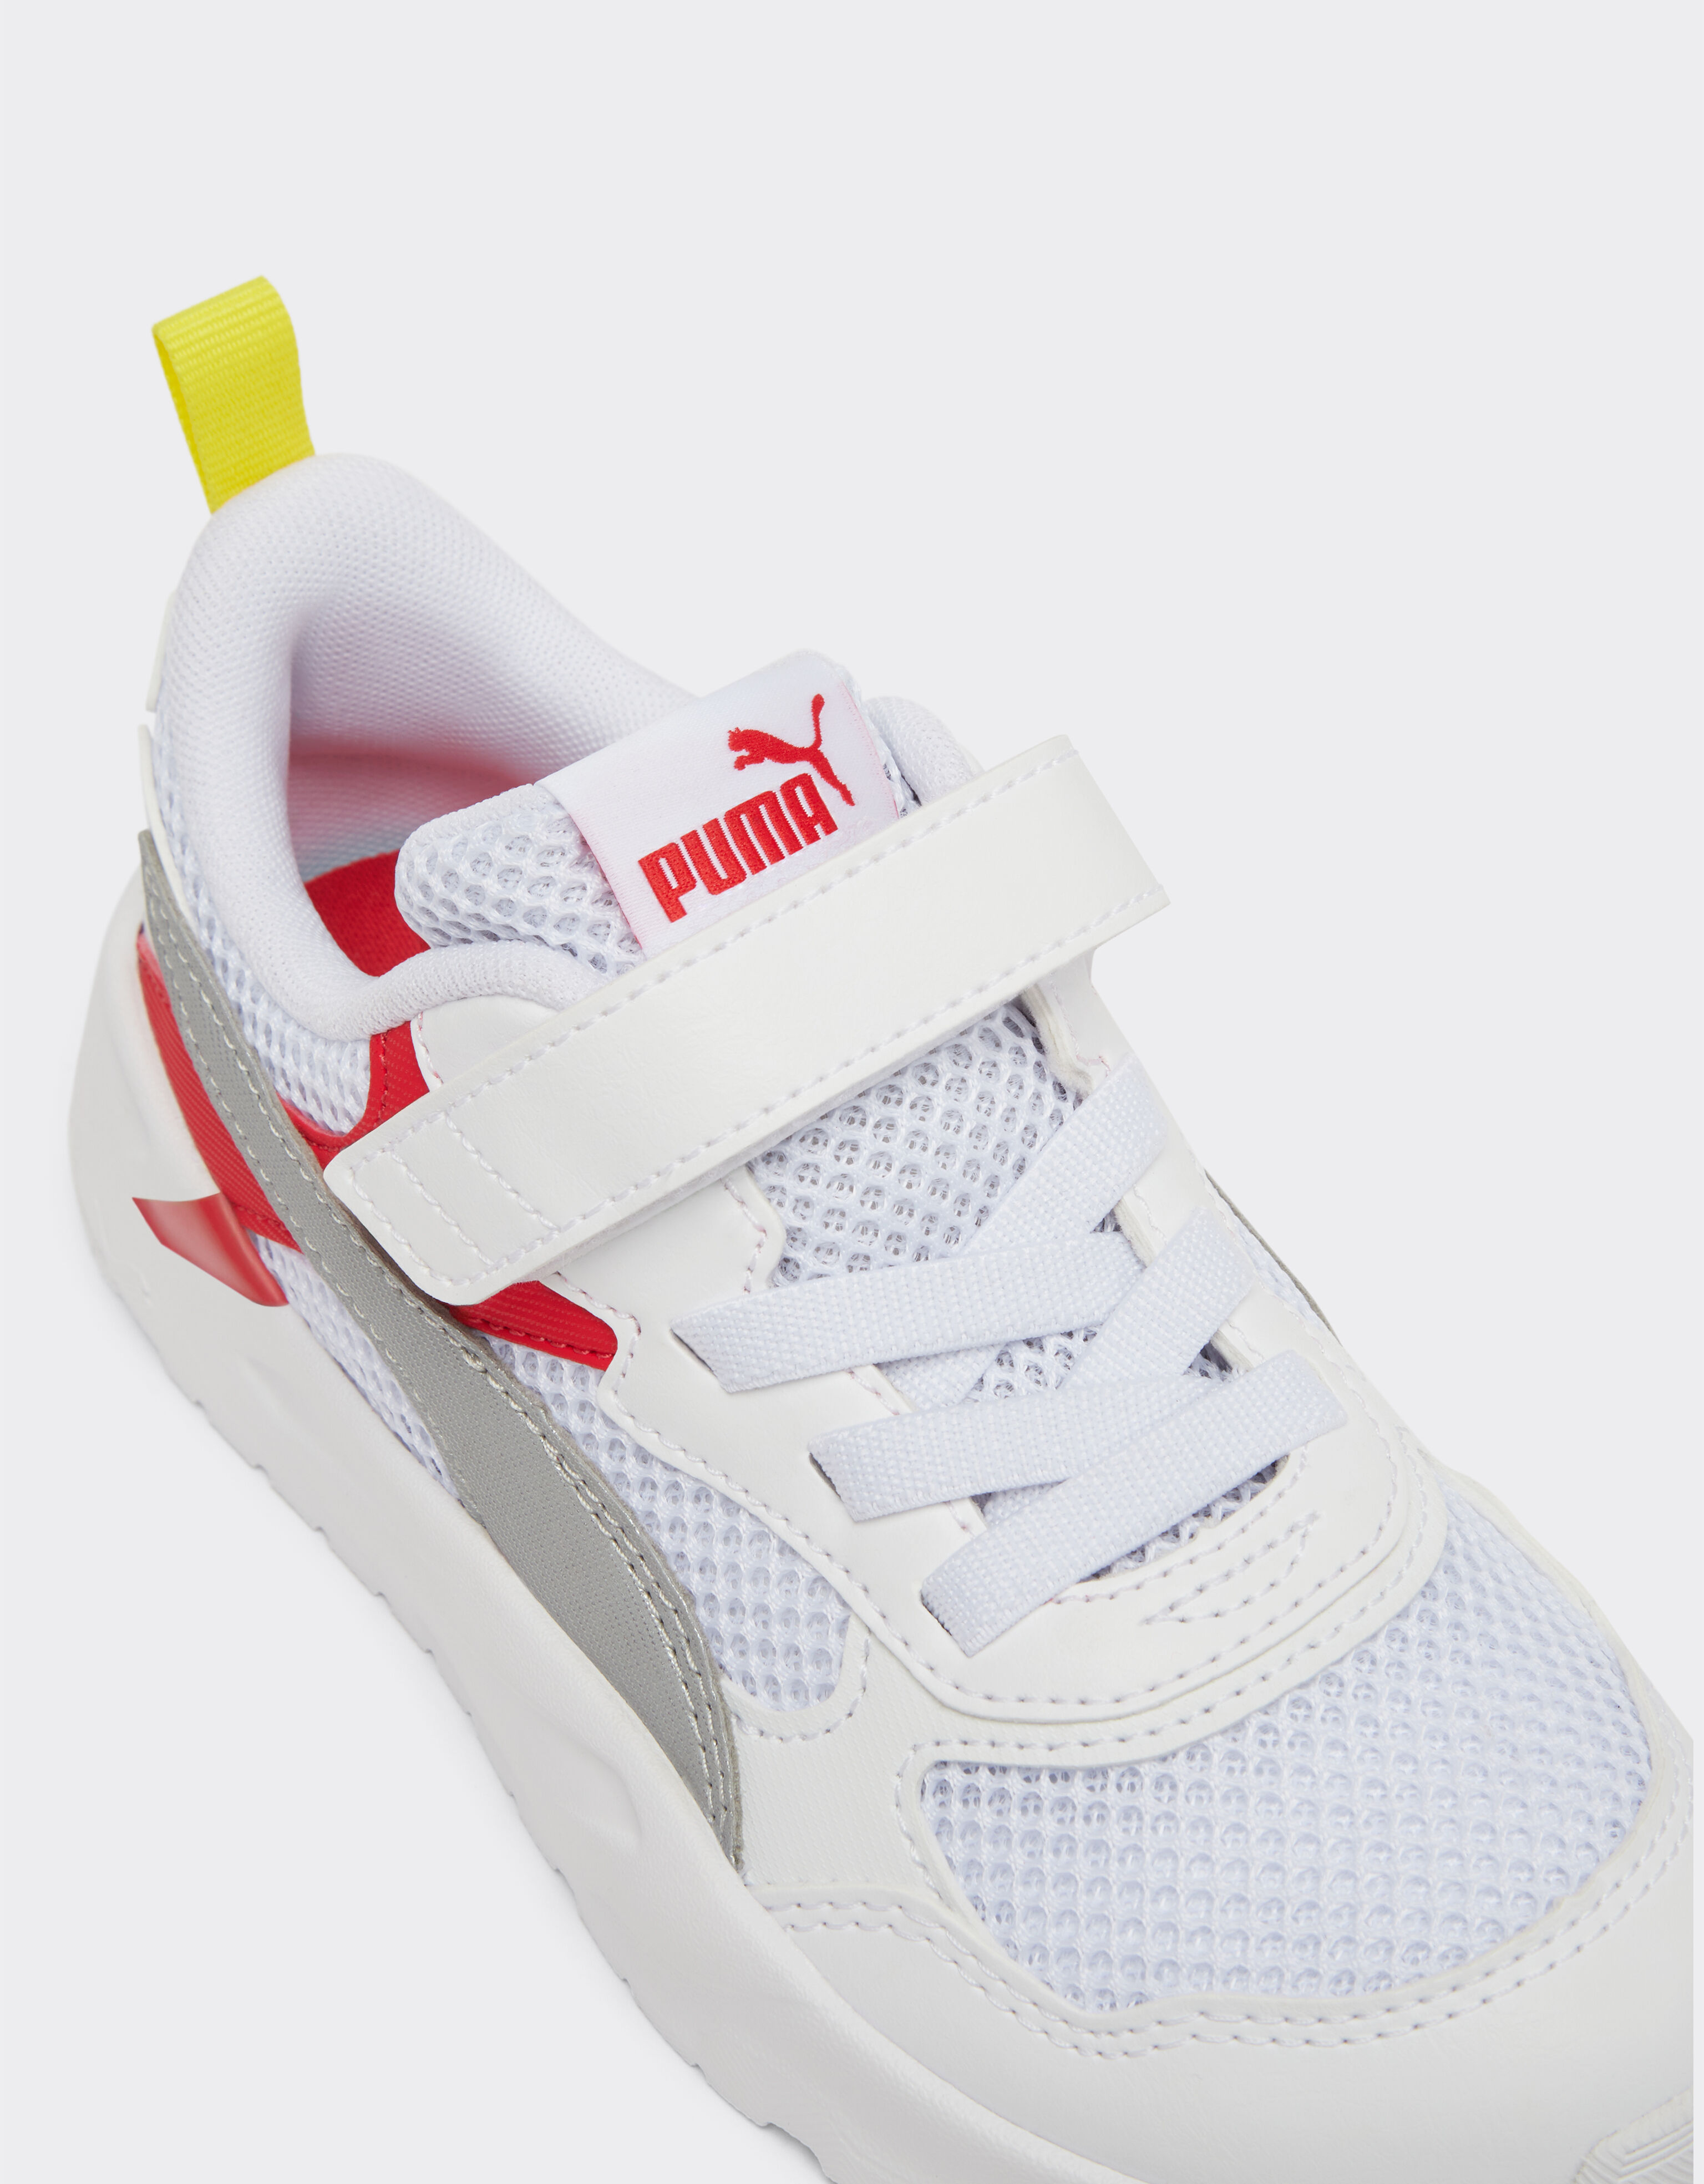 Ferrari Children’s Puma for Scuderia Ferrari Trinity shoes Optical White F1130fK